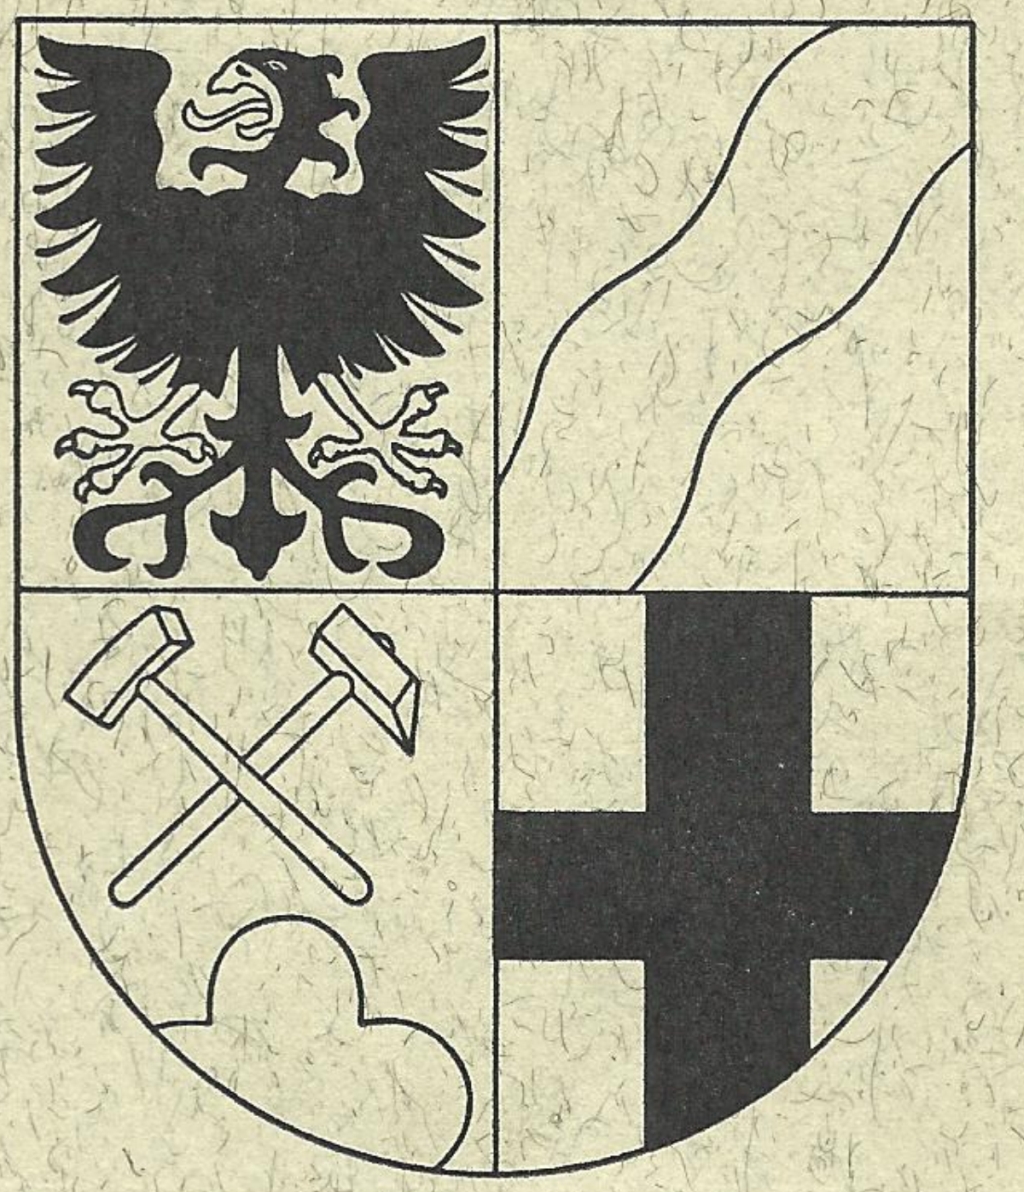 The Würselen City Coat of Arms